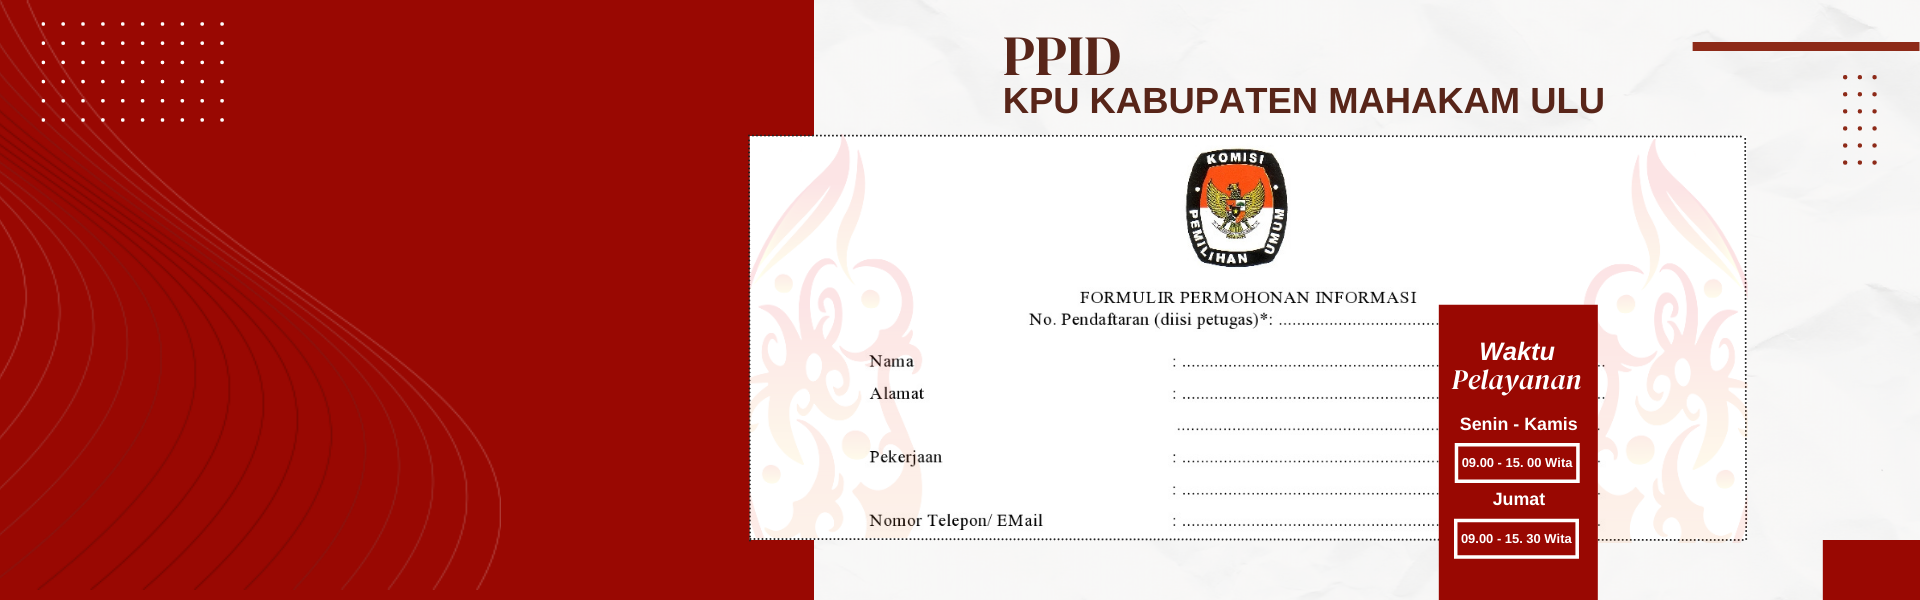 Selamat Datang dilayanan e-PPID KPU Kabupaten Mahakam Ulu